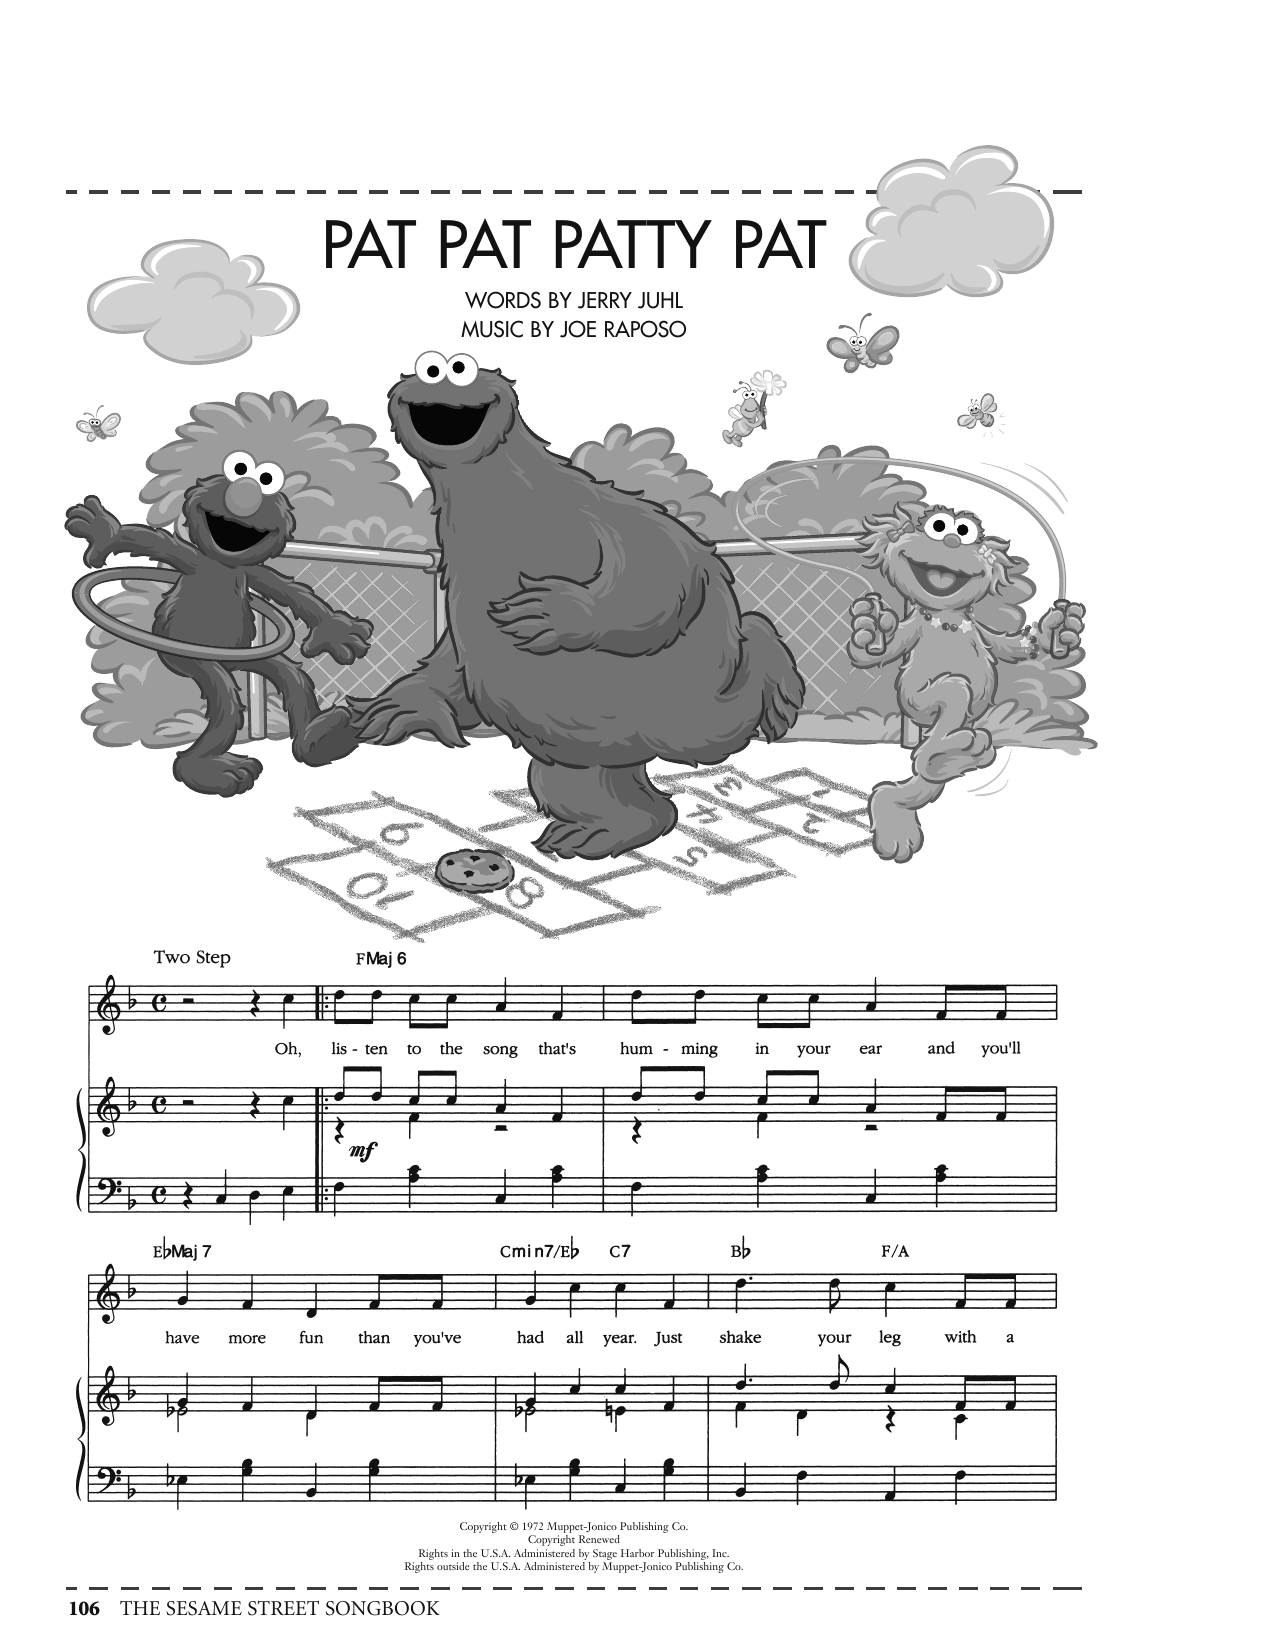 Joe Raposo Pat Pat Patty Pat (from Sesame Street) Sheet Music Notes & Chords for Piano, Vocal & Guitar Chords (Right-Hand Melody) - Download or Print PDF